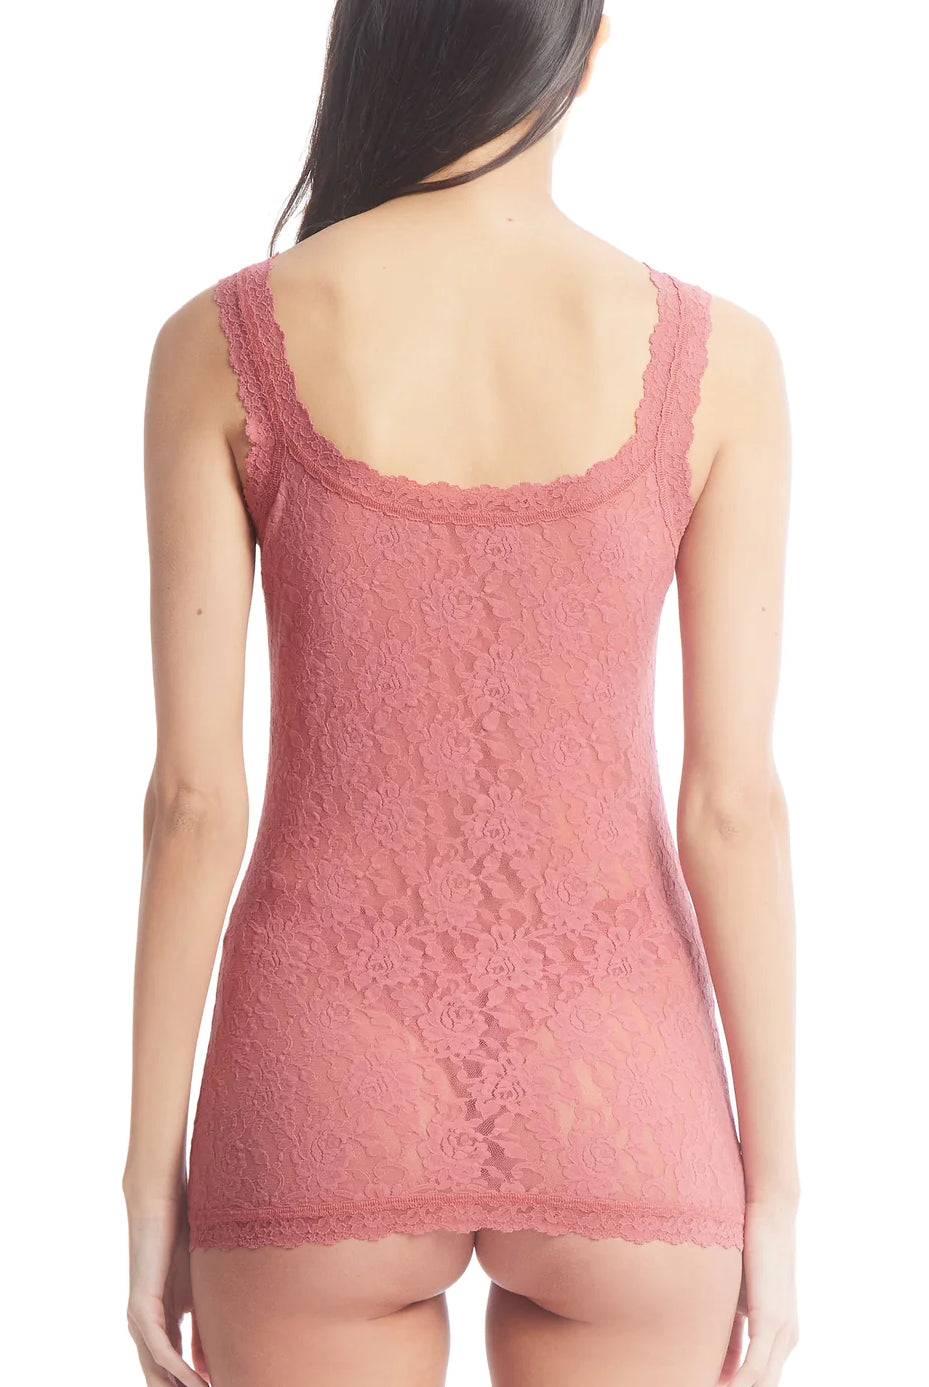 Signature Lace Classic Cami - Pink Sands - Flirt! Luxe Lingerie & Sleepwear